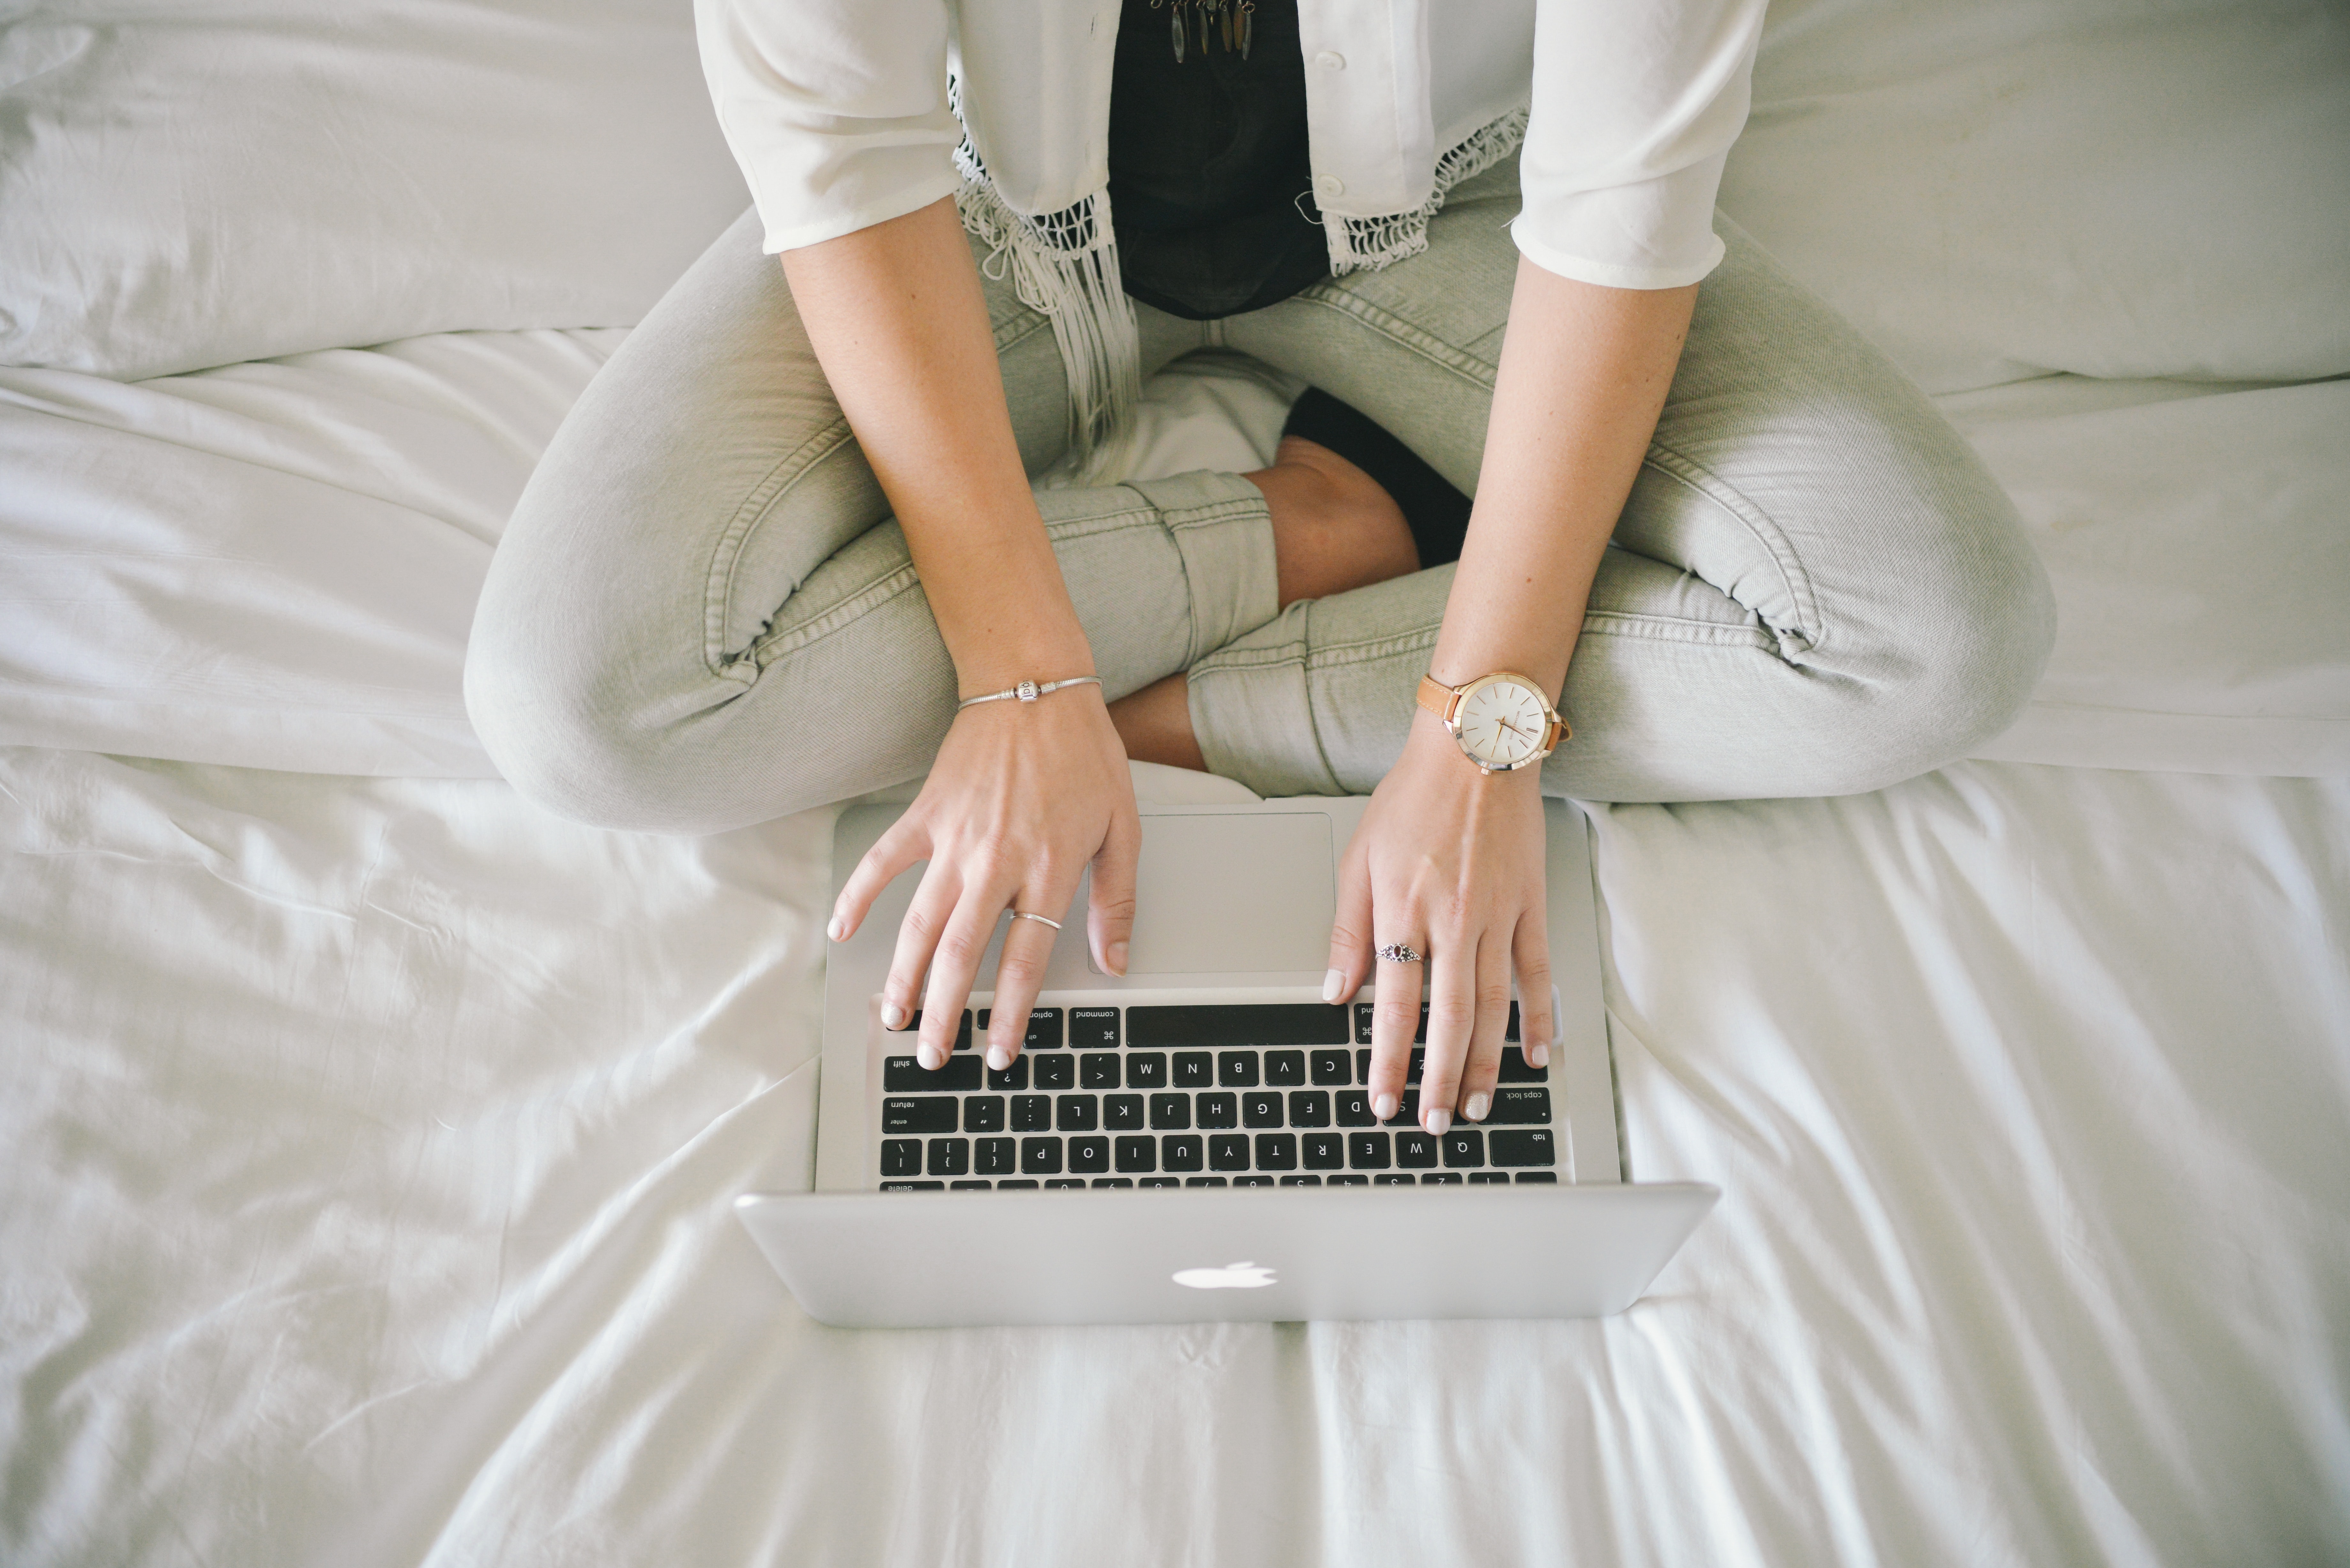 Women sitting in white bed typing on laptop keyboard